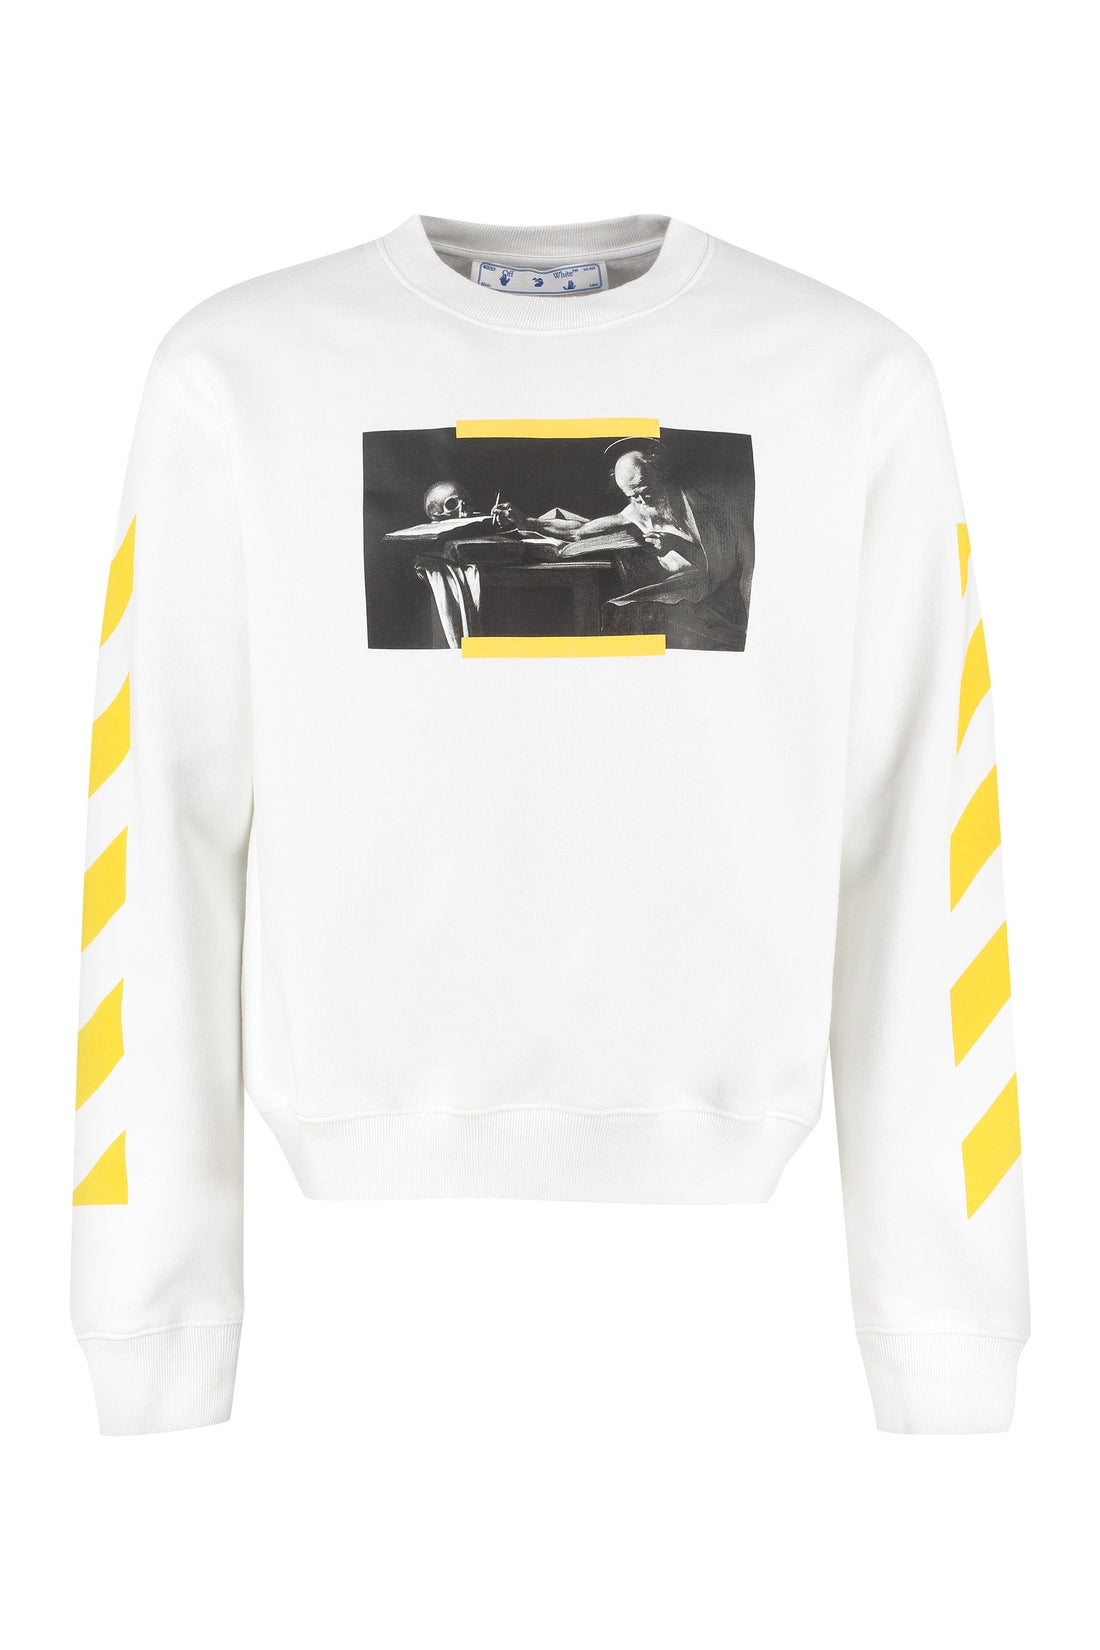 Off-White-OUTLET-SALE-Printed cotton sweatshirt-ARCHIVIST